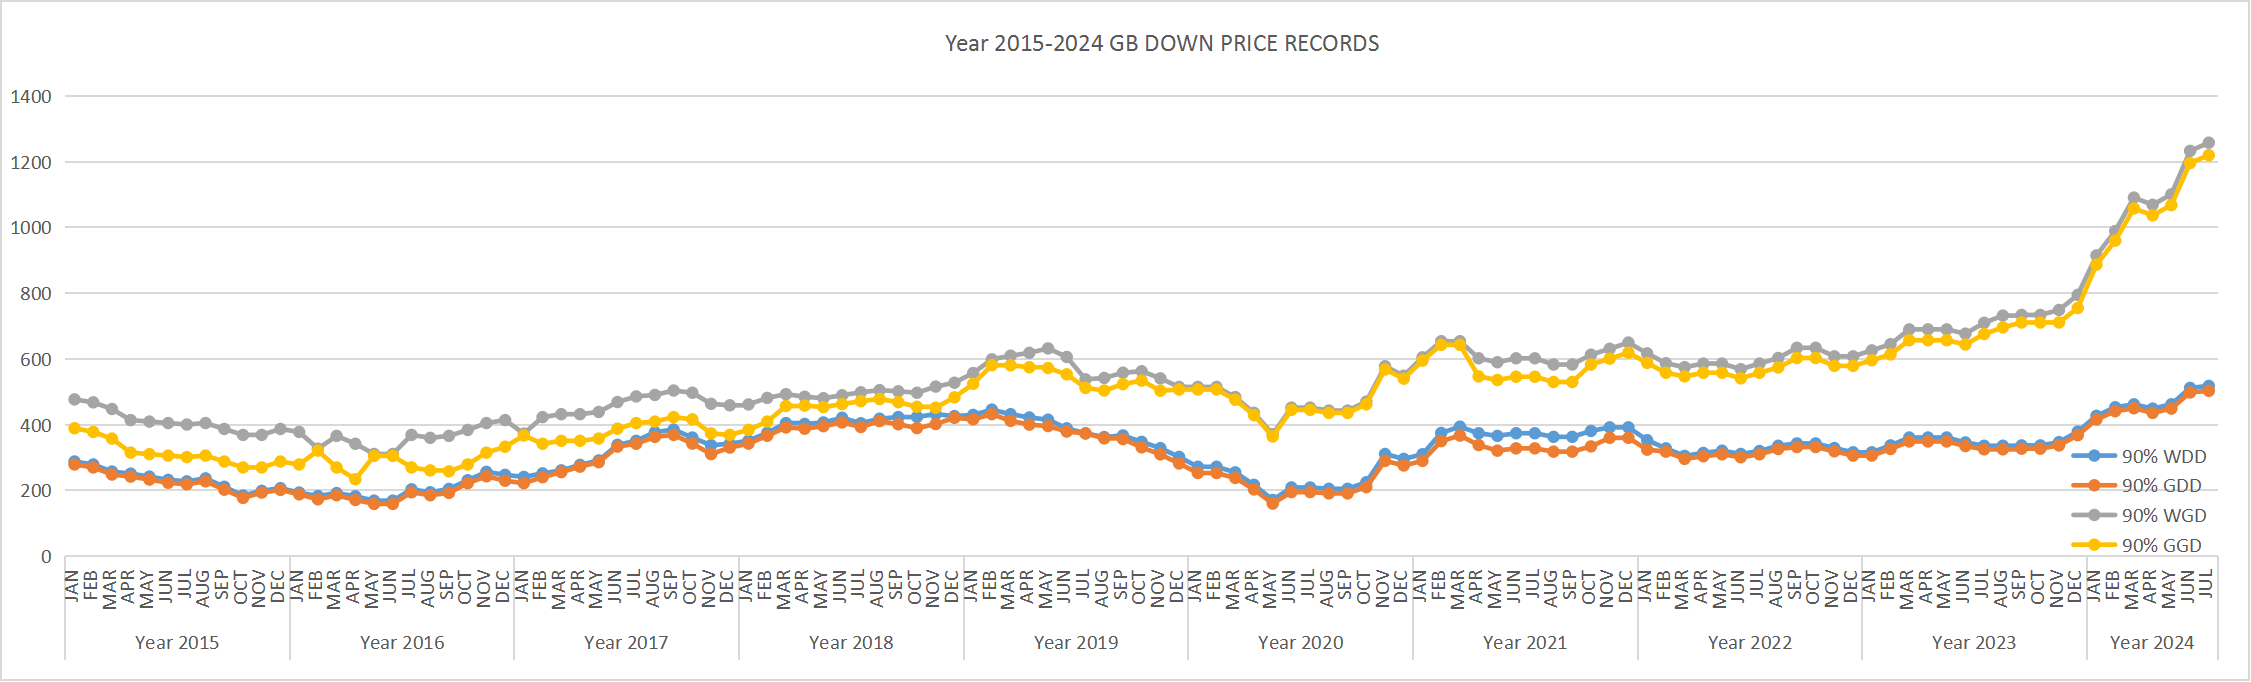 2015-2024 GB DOWN PRICE RECORDS